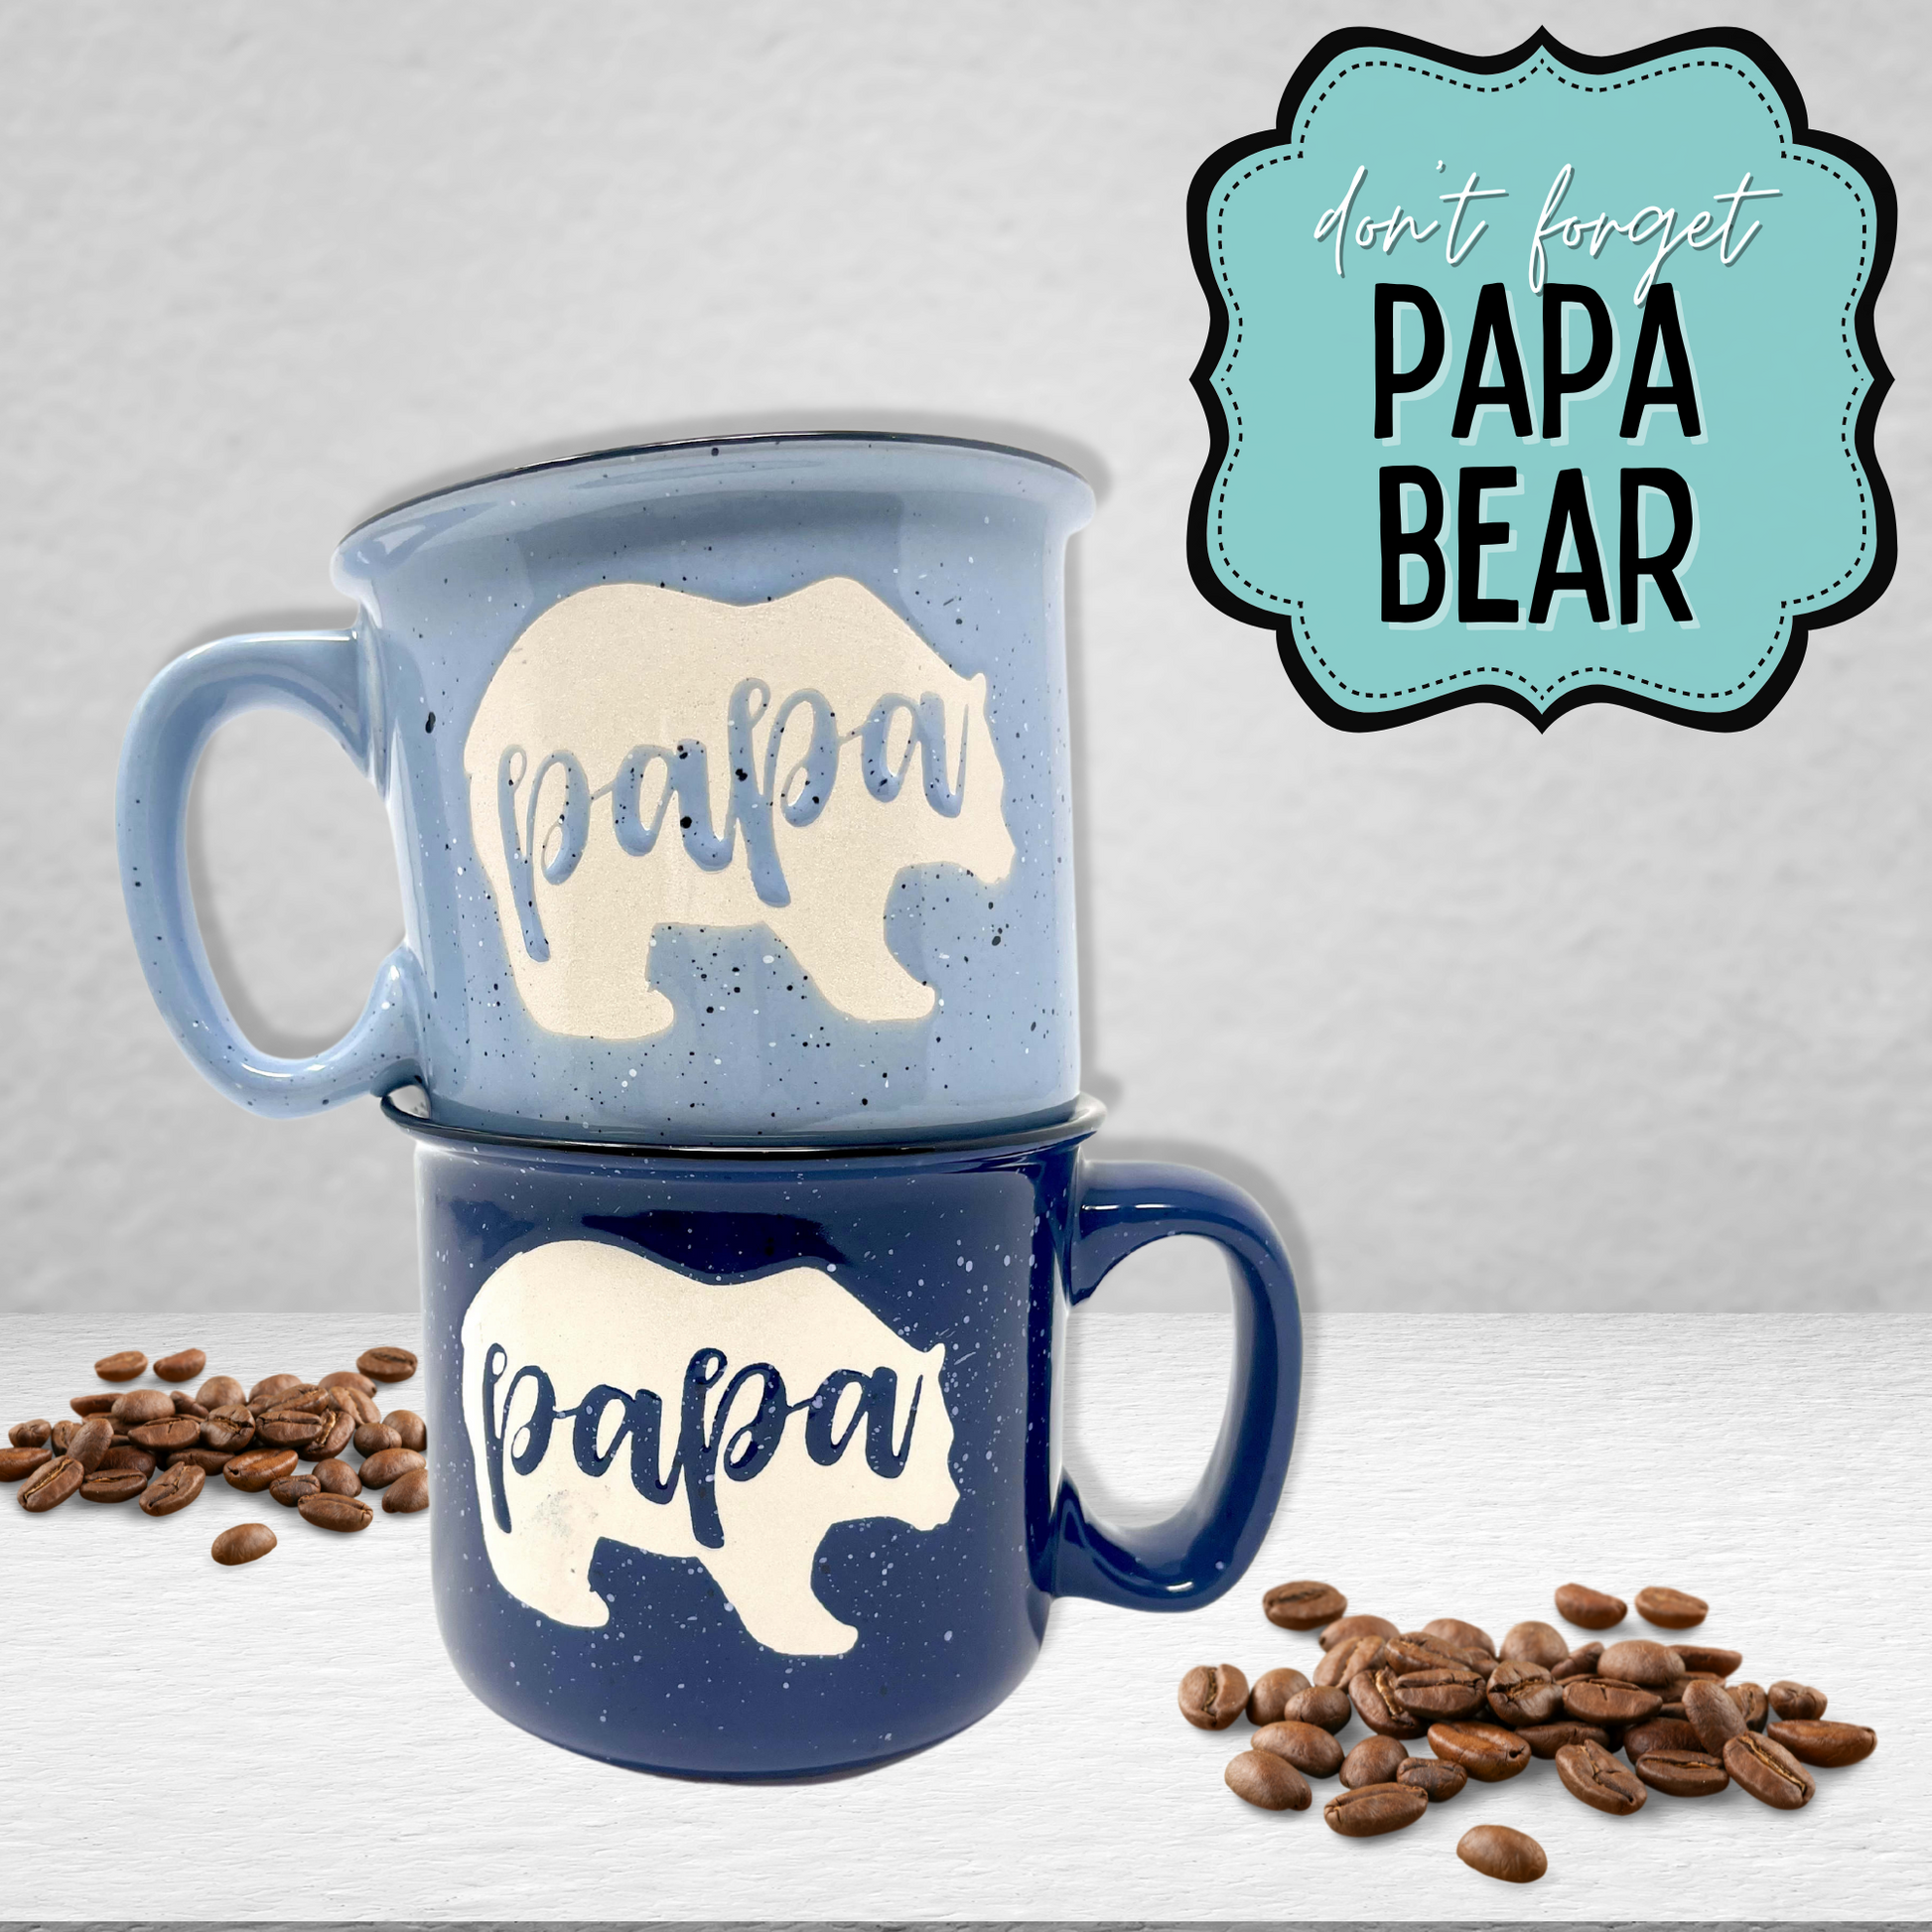 Coffee Mug By Tag Mama Bear And Papa Bear Pink Blue 14 Oz Set Of 2